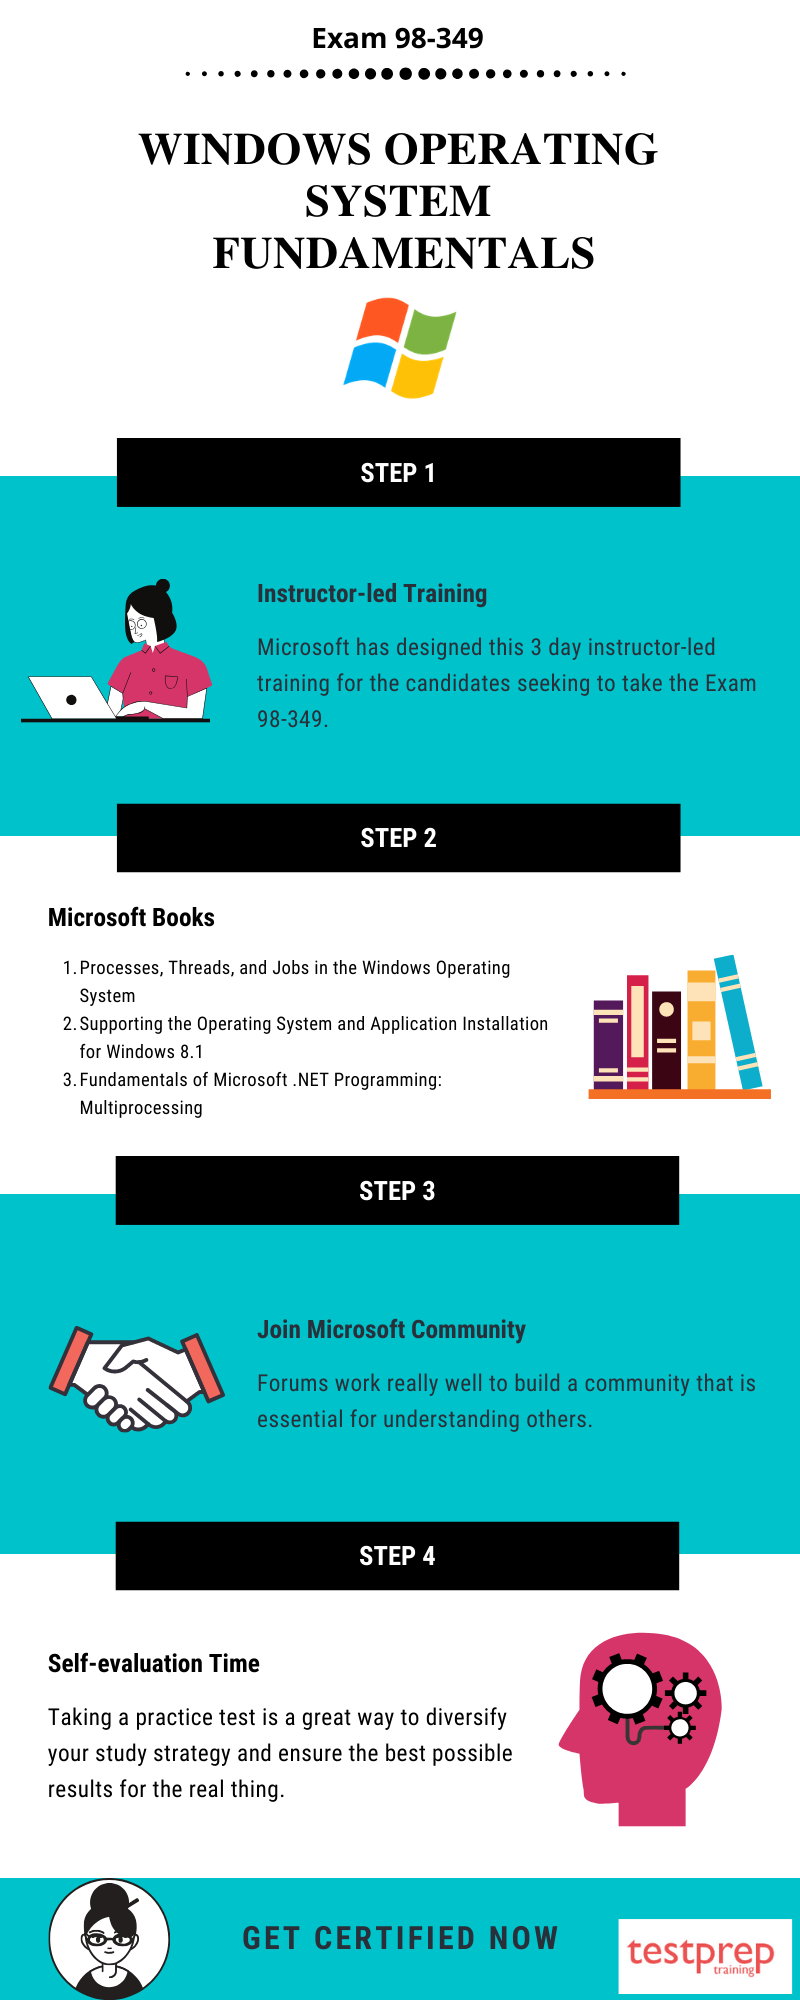 Exam 98-349: Windows Operating System Fundamentals - Preparation Guide